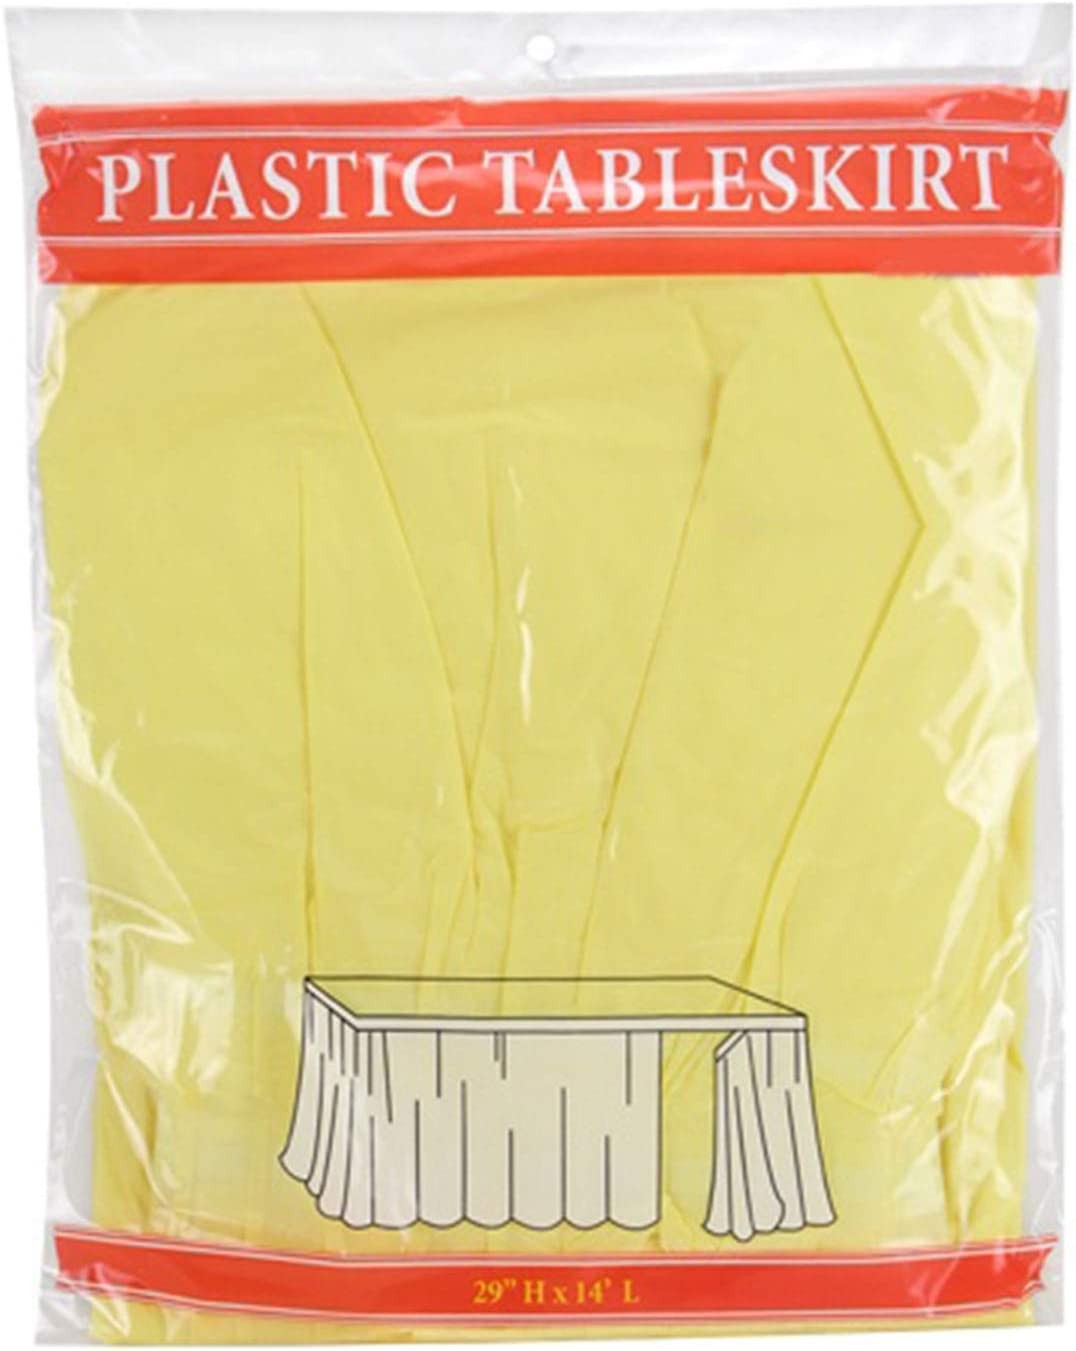 TigerChef Yellow Plastic Table Skirt 14" x 29" - 12 pcs